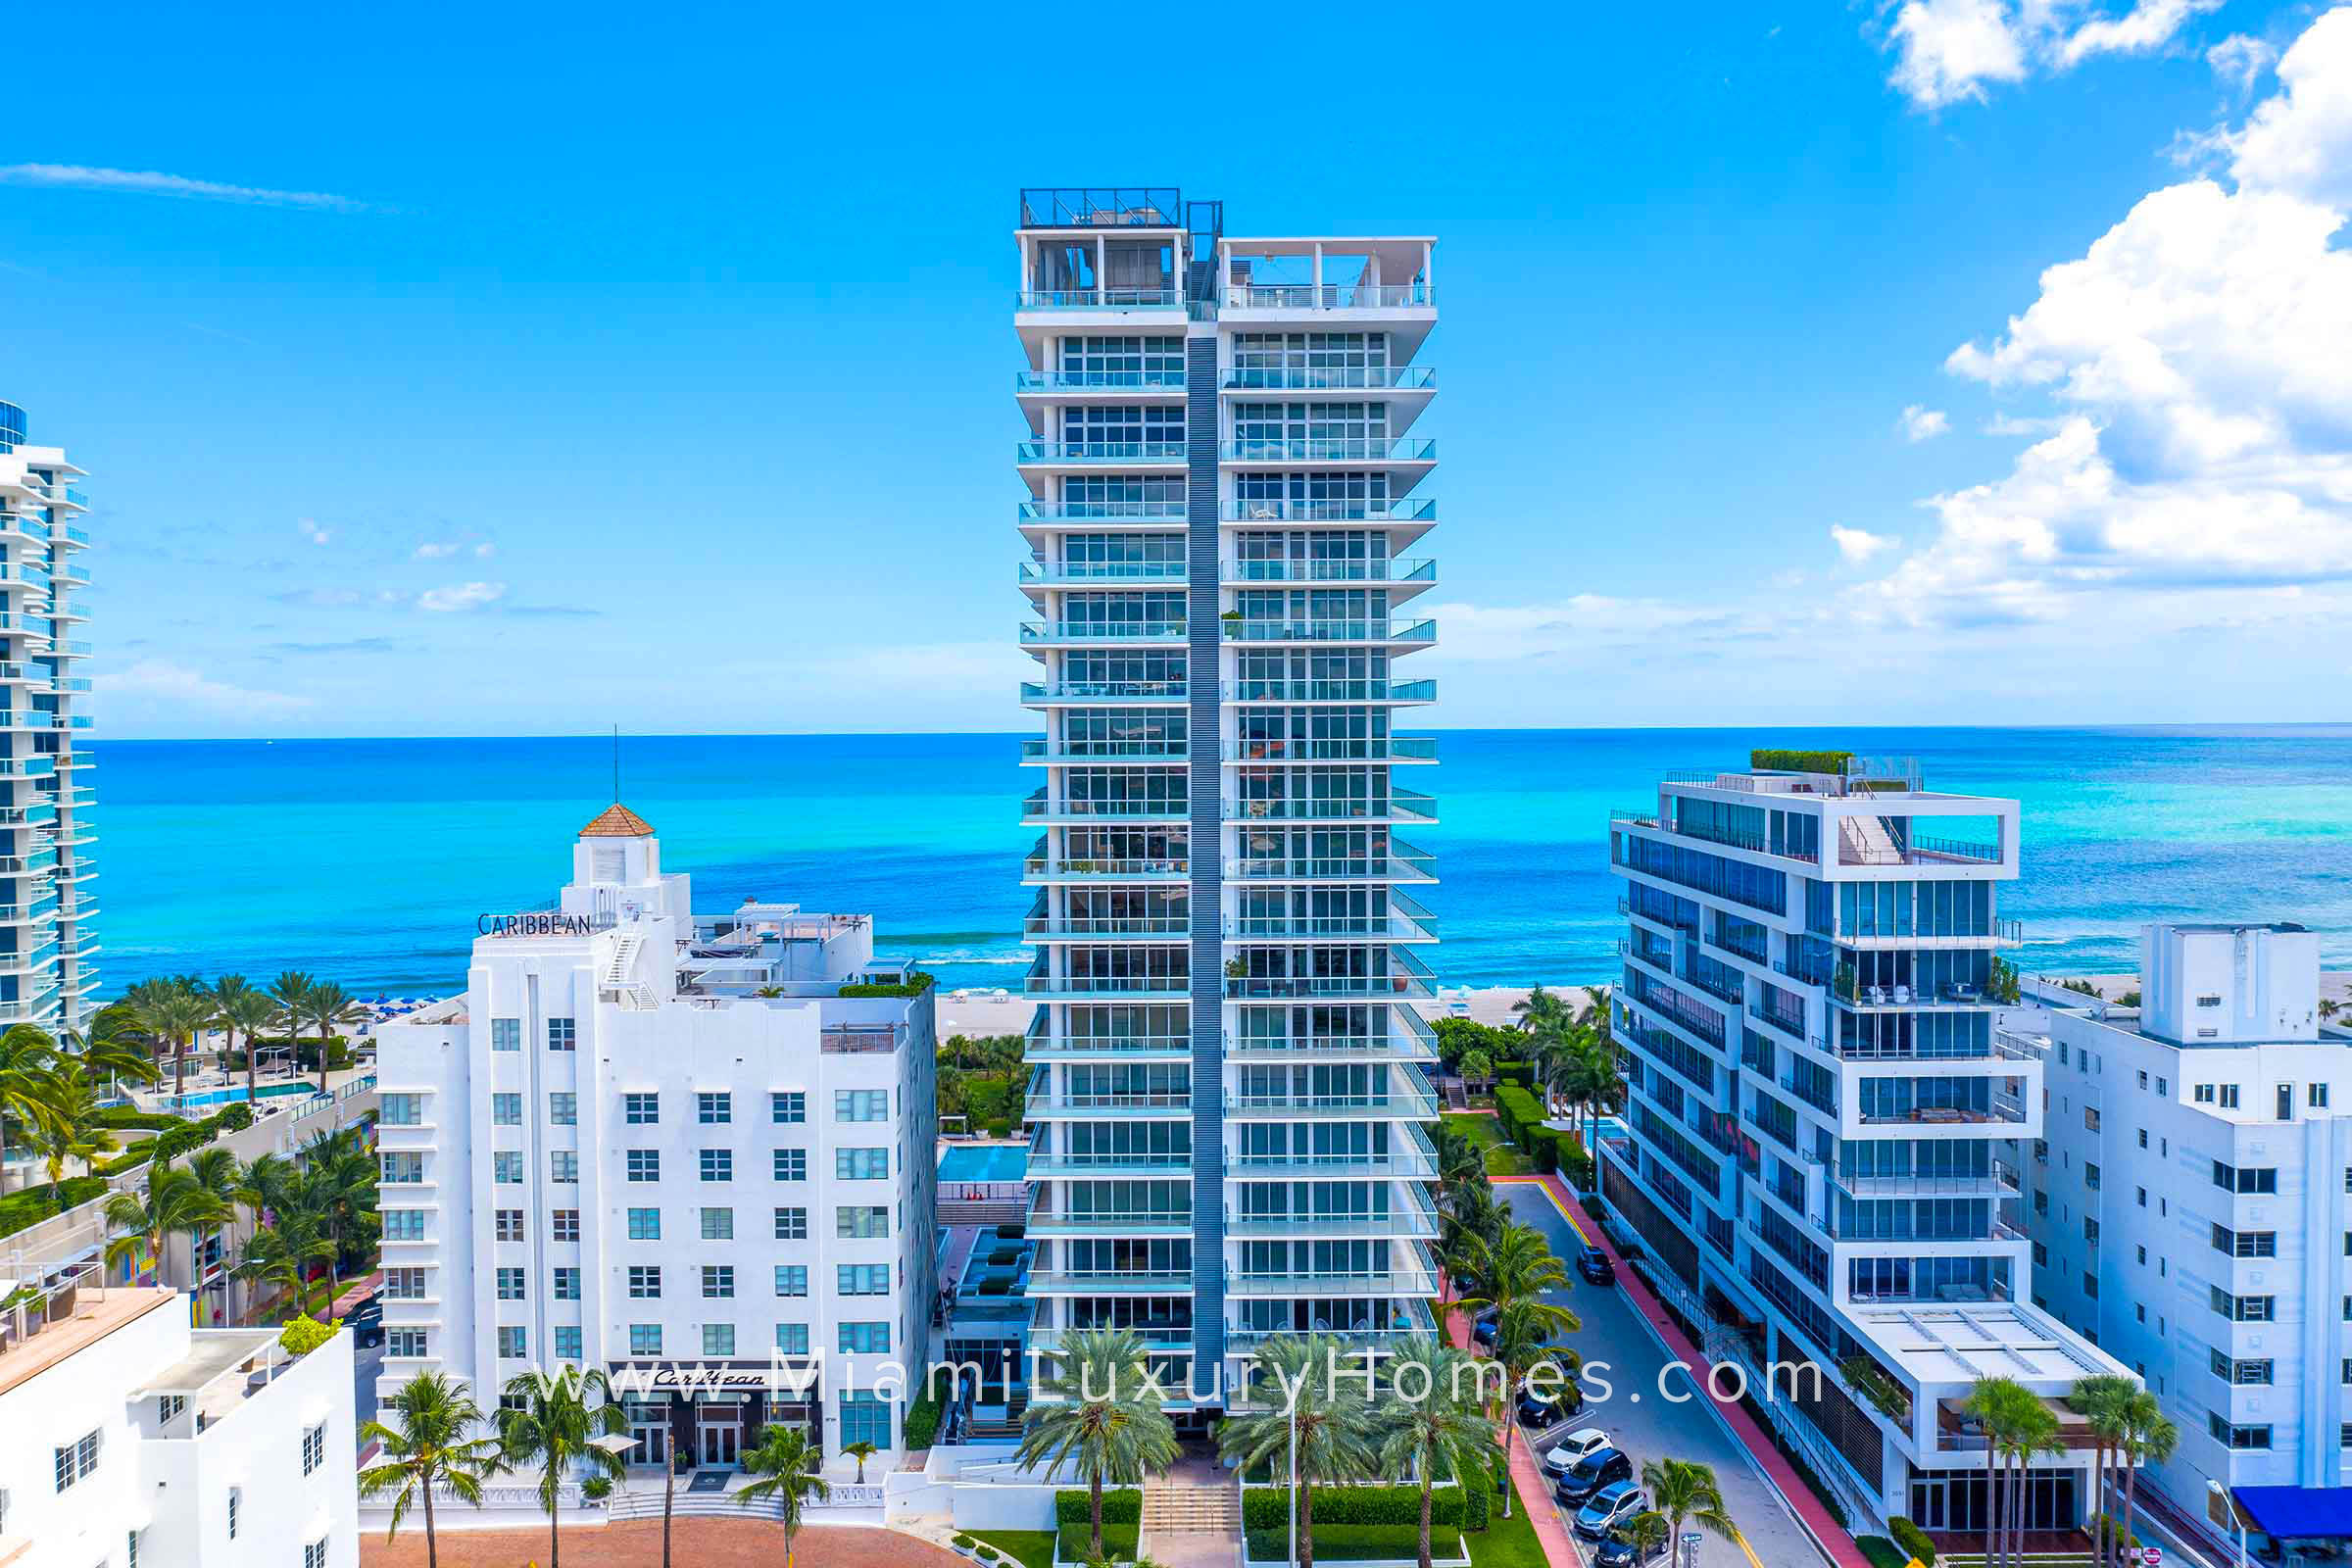 Caribbean Condos in Miami Beach